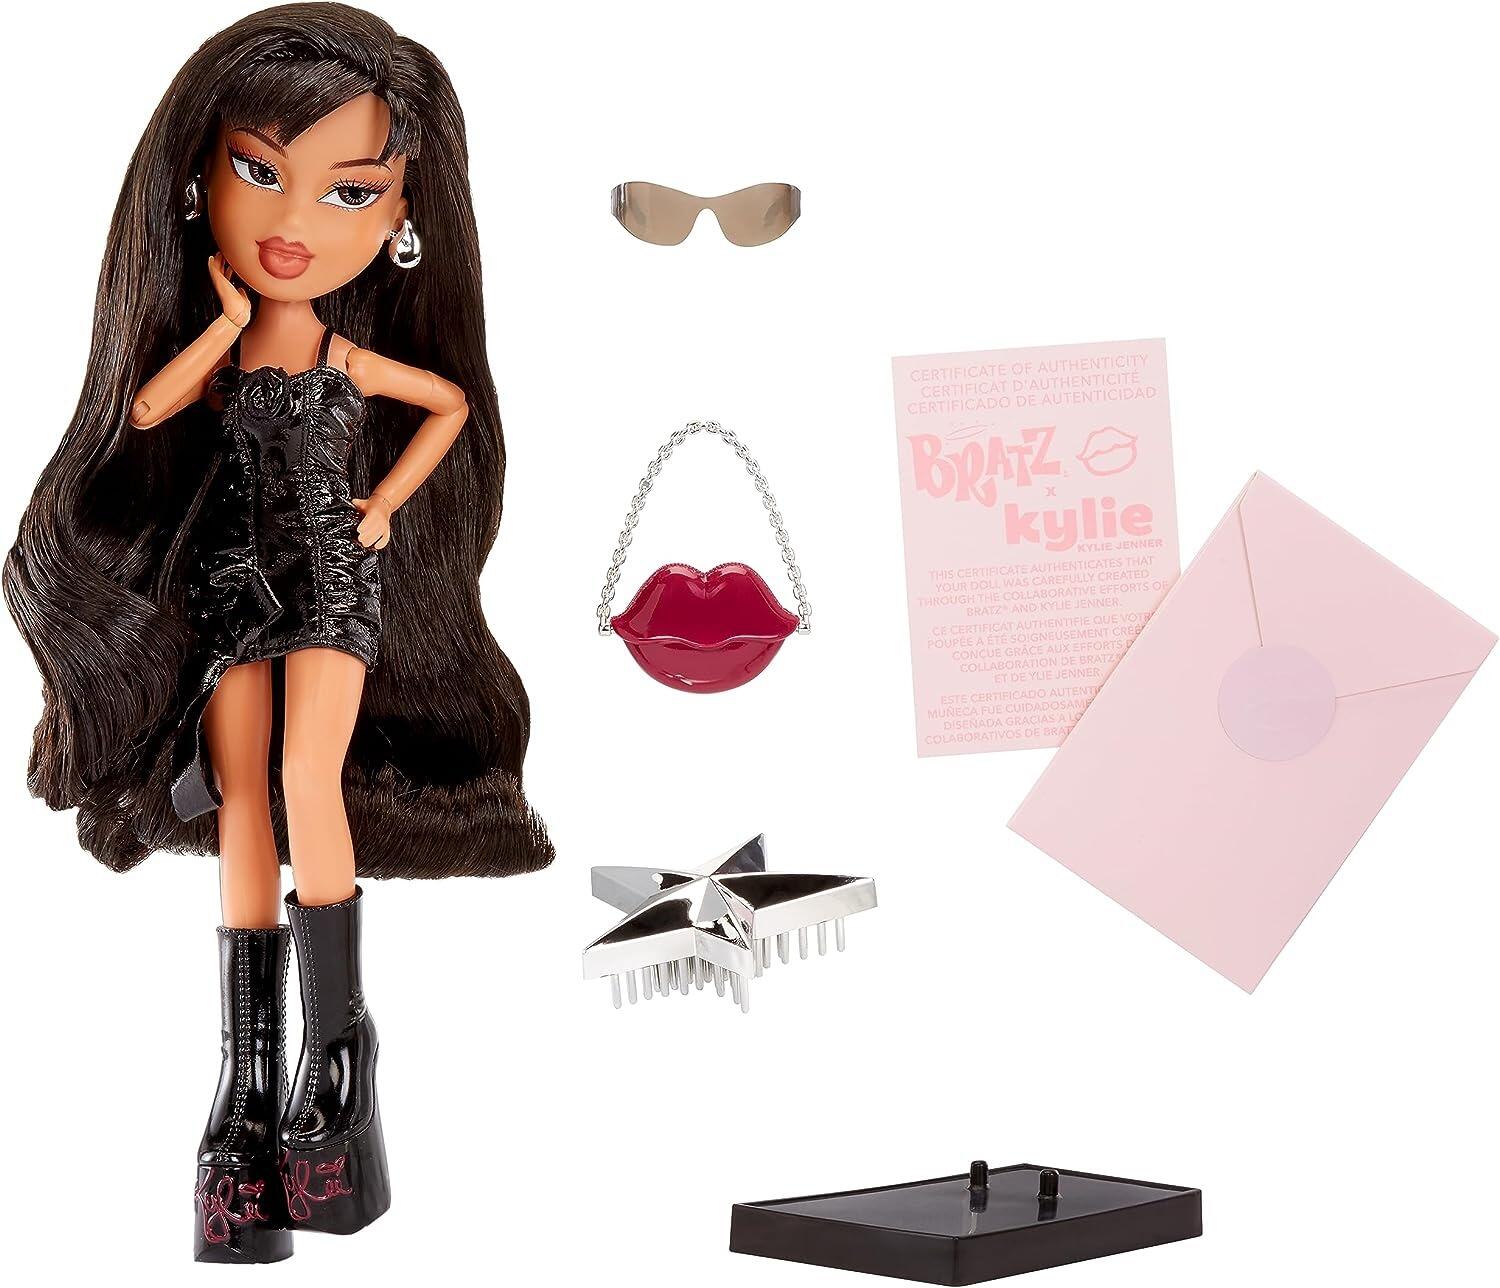 Bratz x Kylie Jenner Day Fashion Doll with Accessories and Poster, Bratz  Dolls UK